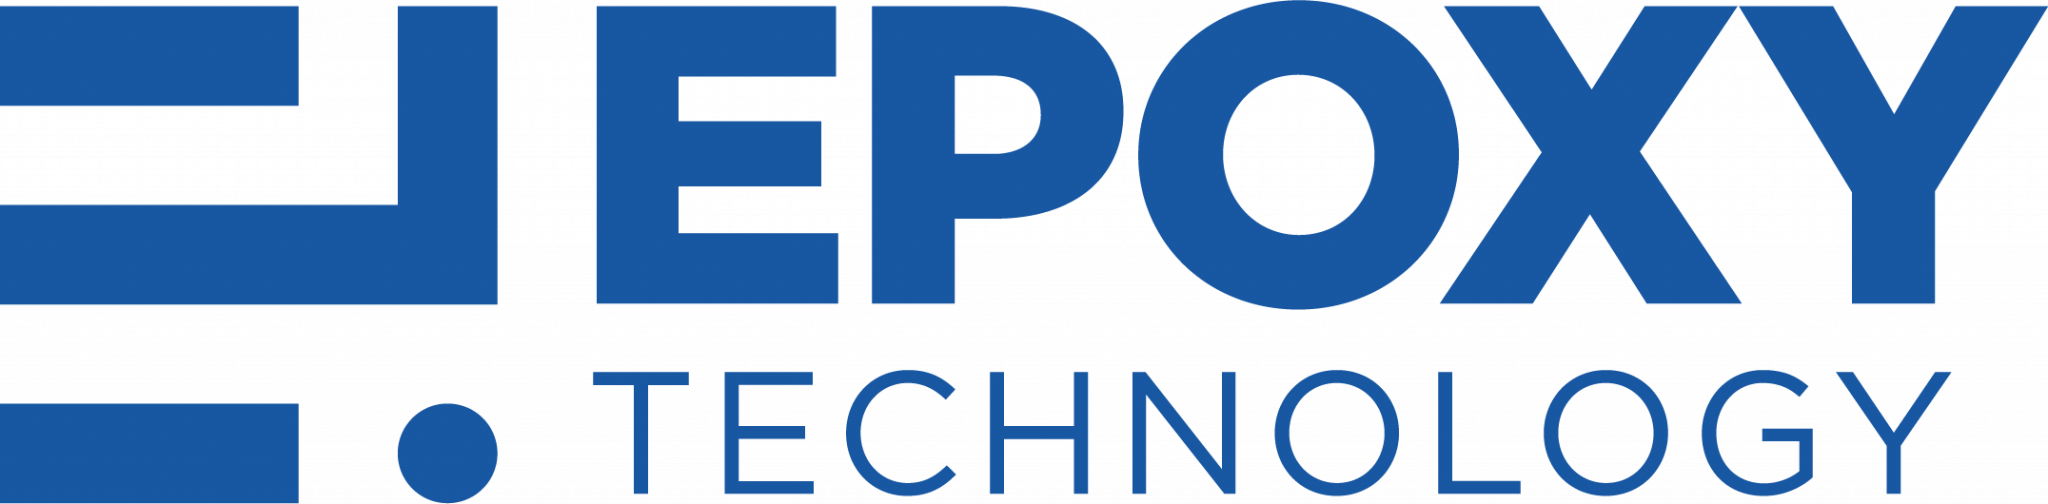 epoxy logo ideas 5